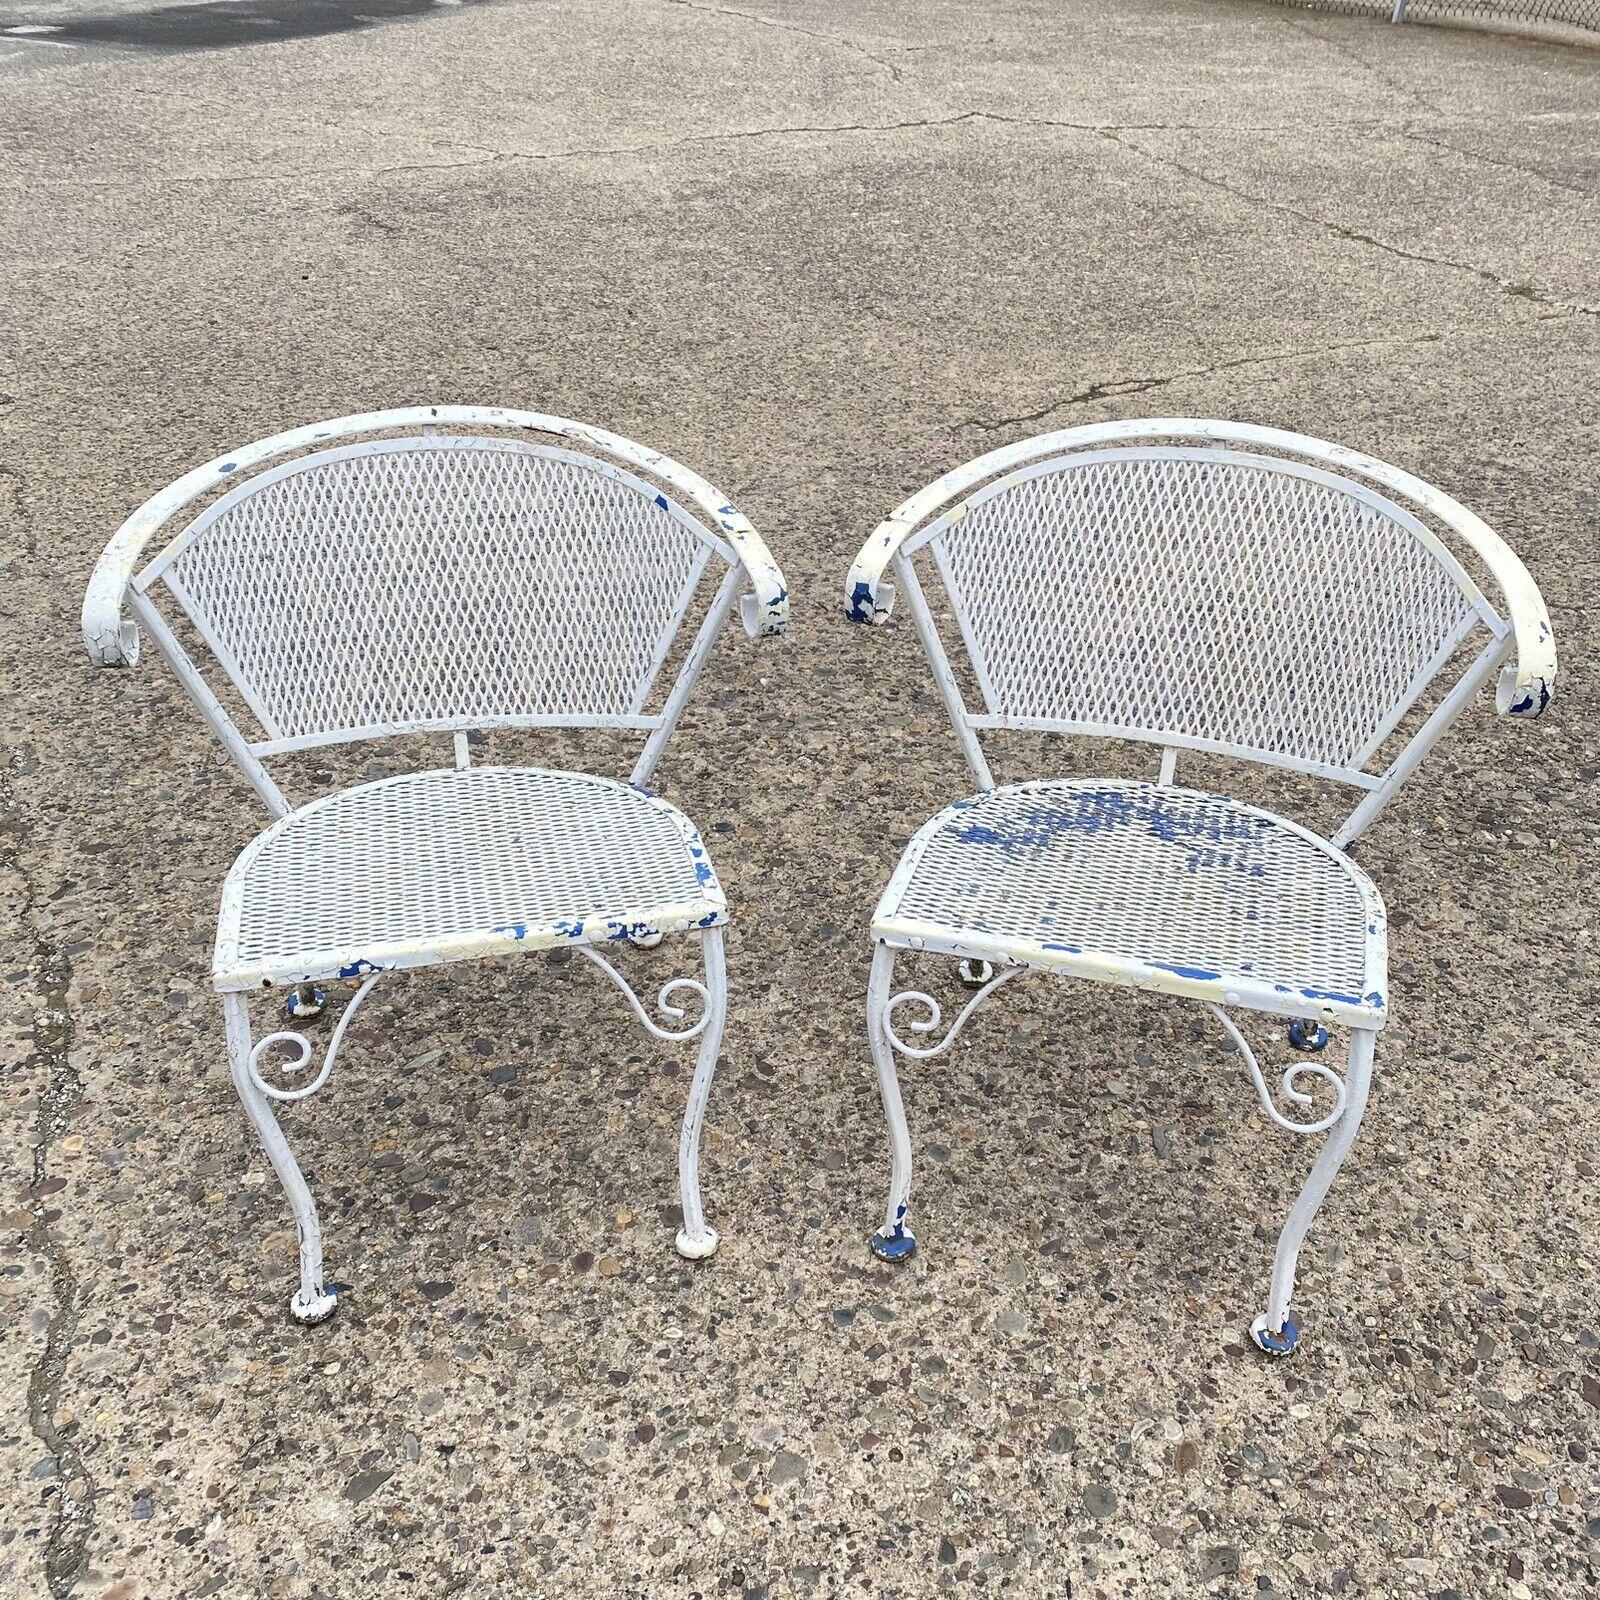 Vintage Wrought Iron Woodard Salterini Style Mid Century Outdoor Patio Chairs - Pair. Circa Mid to Late 20th Century.
Measurements: 28.5